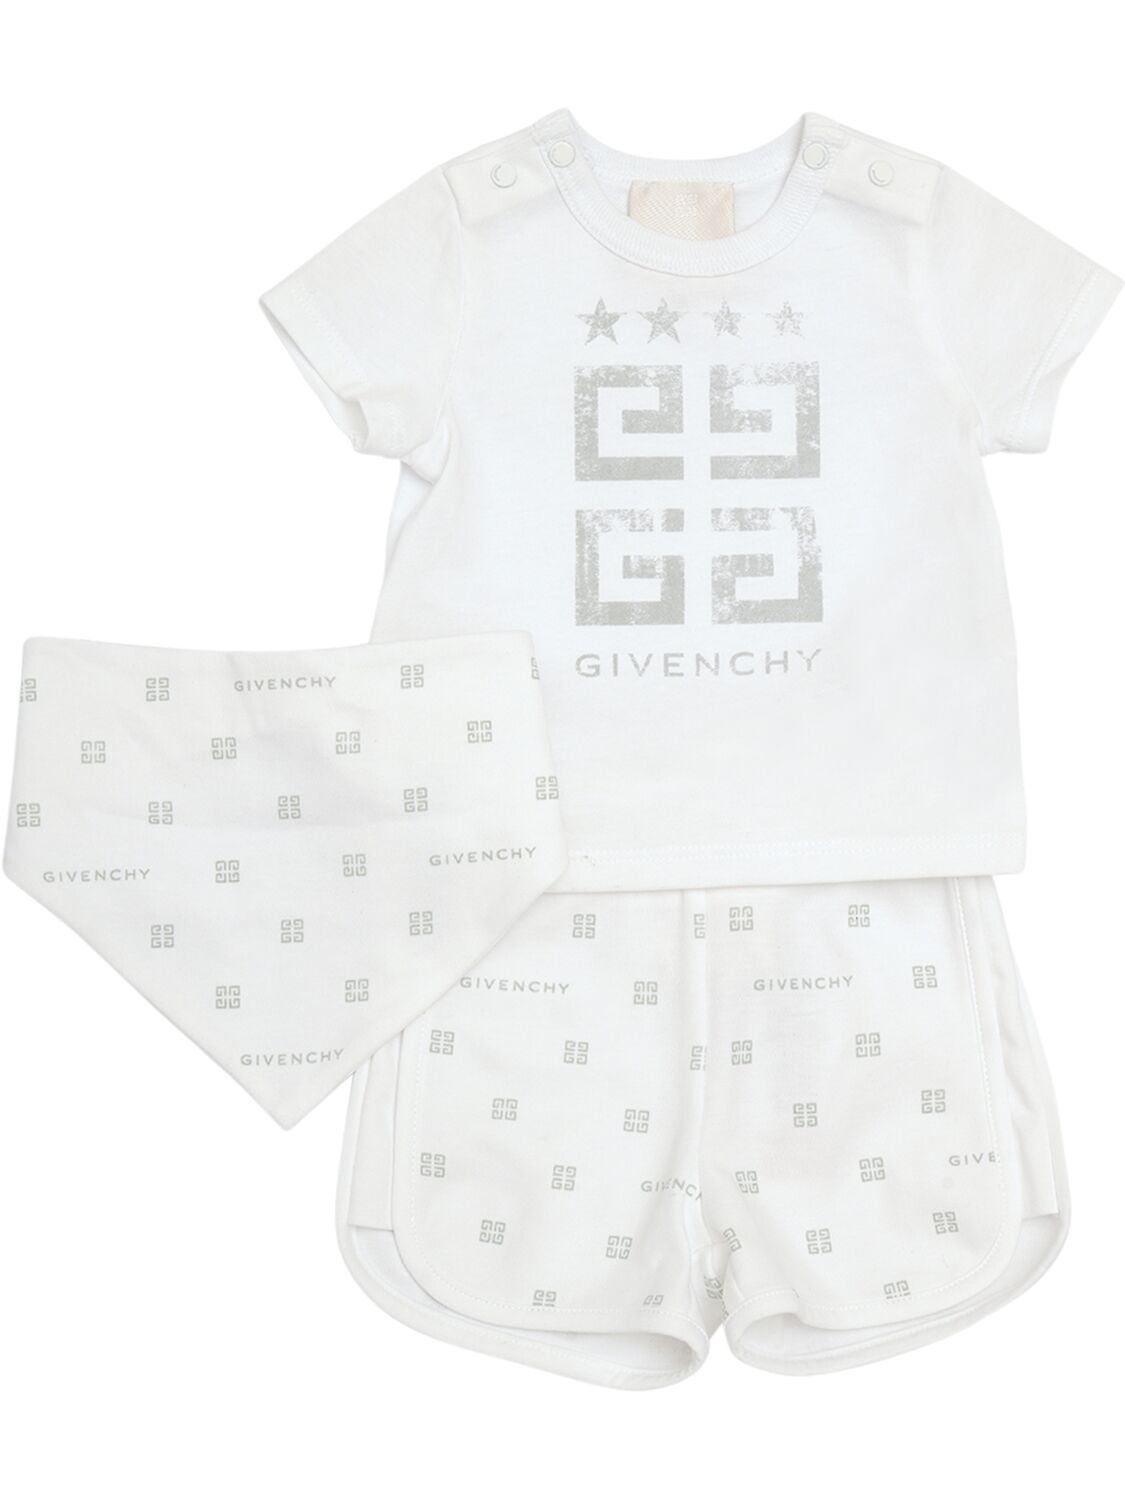 Givenchy Kids' Cotton Jersey T-shirt, Shorts & Bandana In White